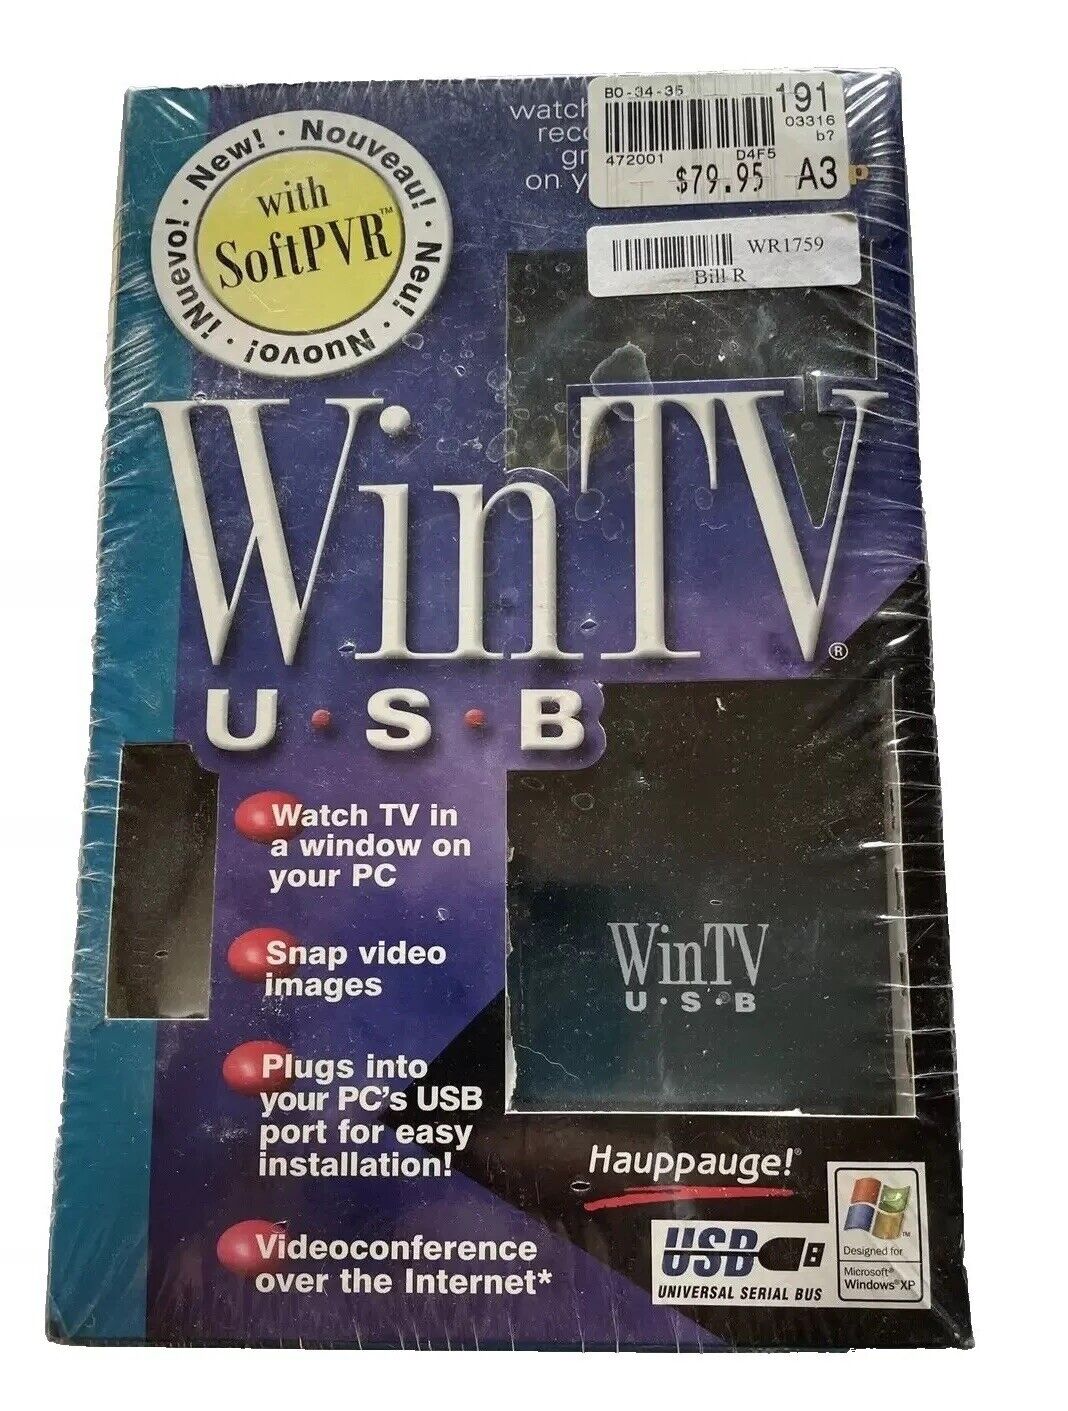 WinTV USB Model 602 New/Sealed in Retail Box Hauppauge Tech Kit Electronic